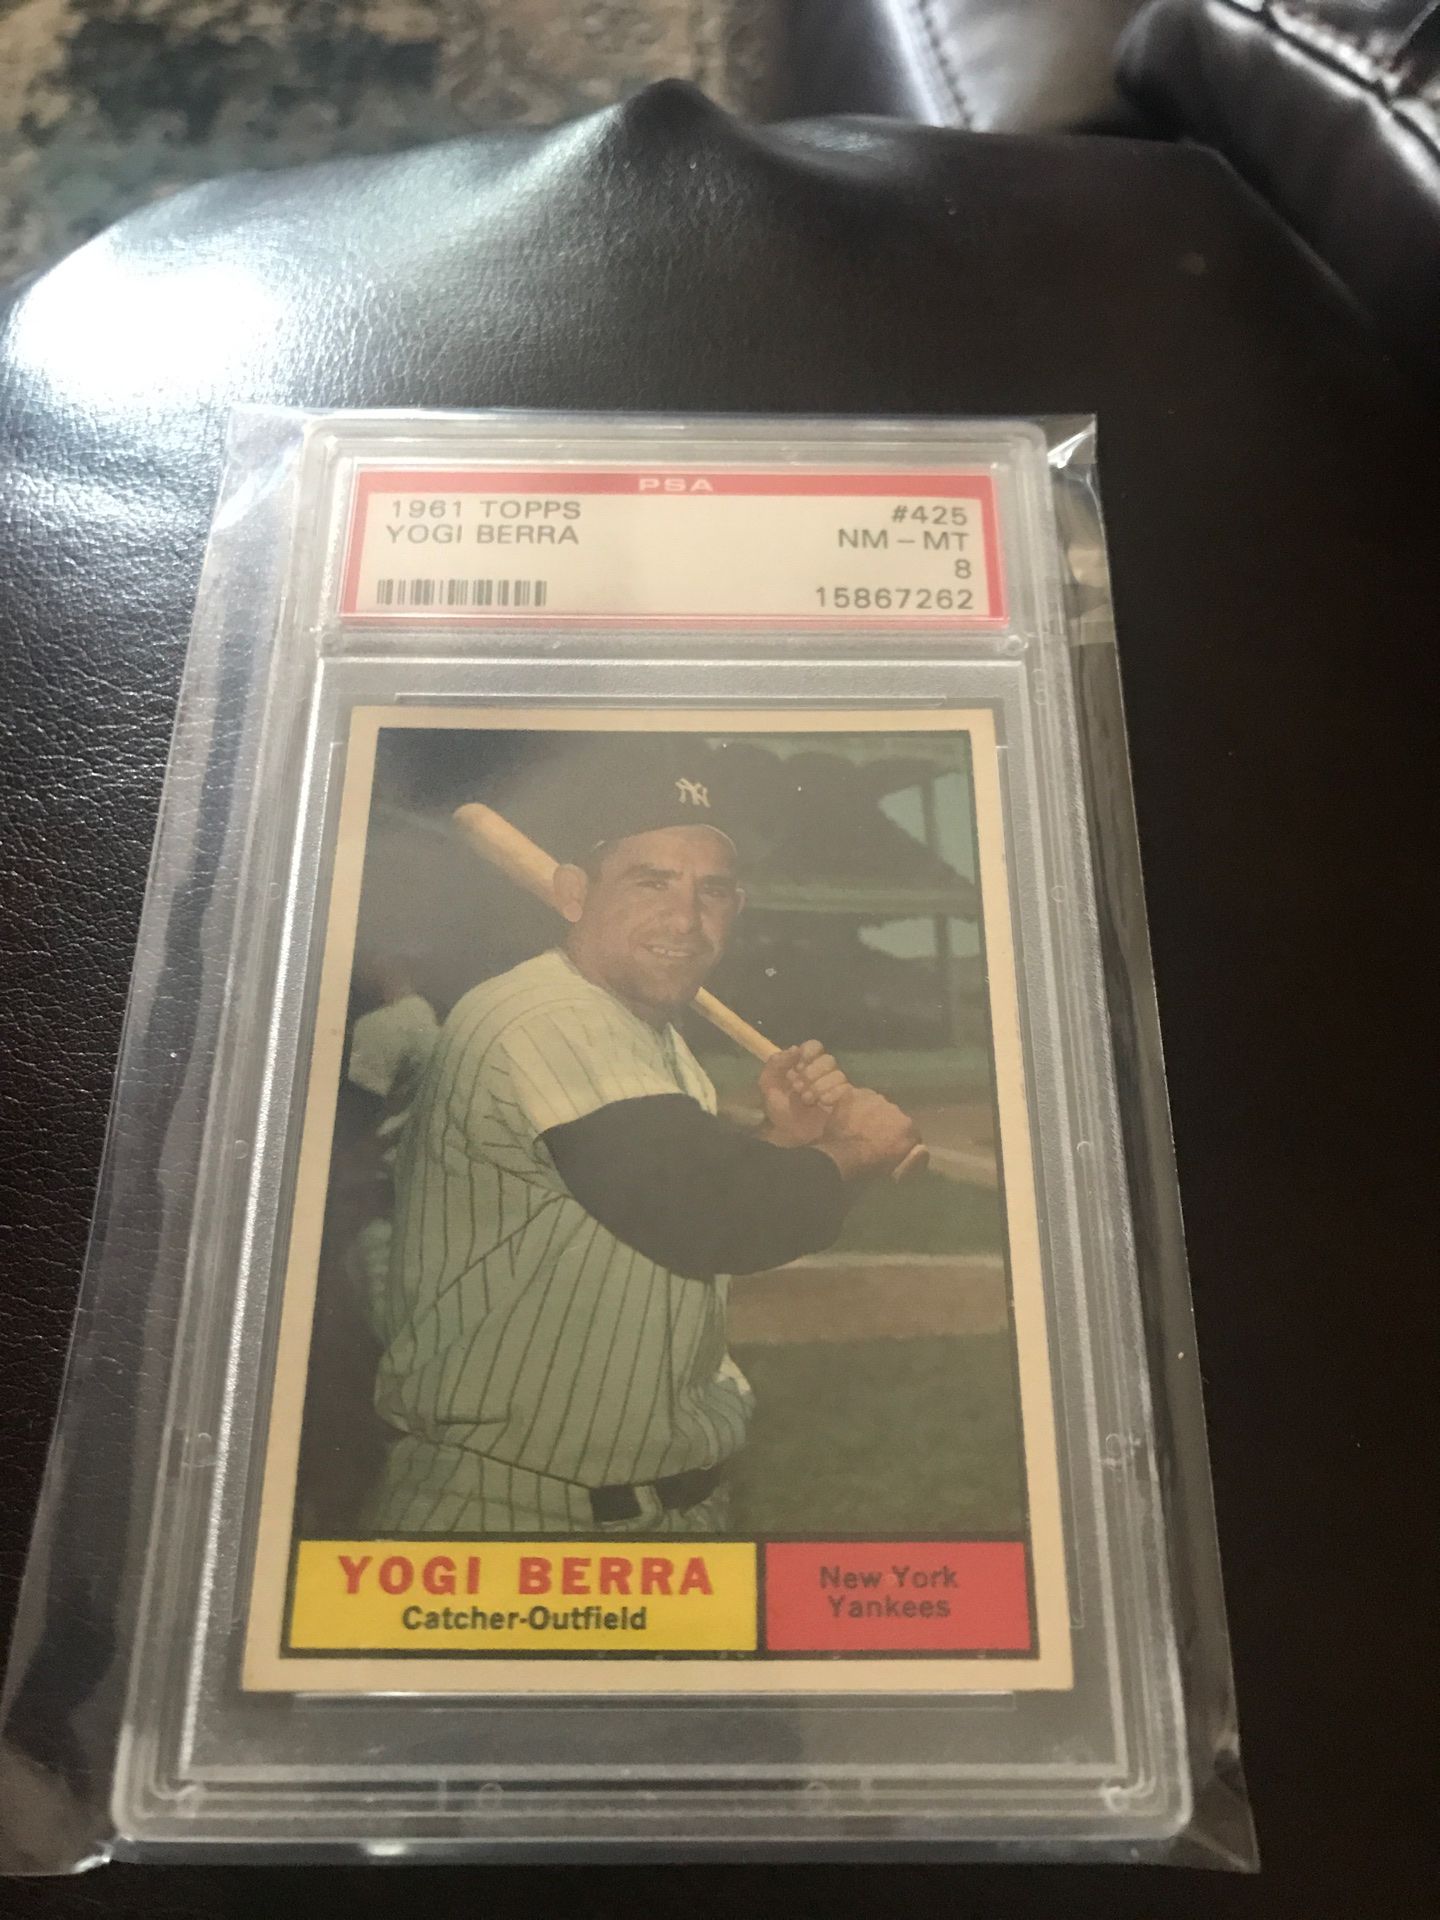 1961 topps psa 8 Yogi Berra. $275. Must be able to pickup